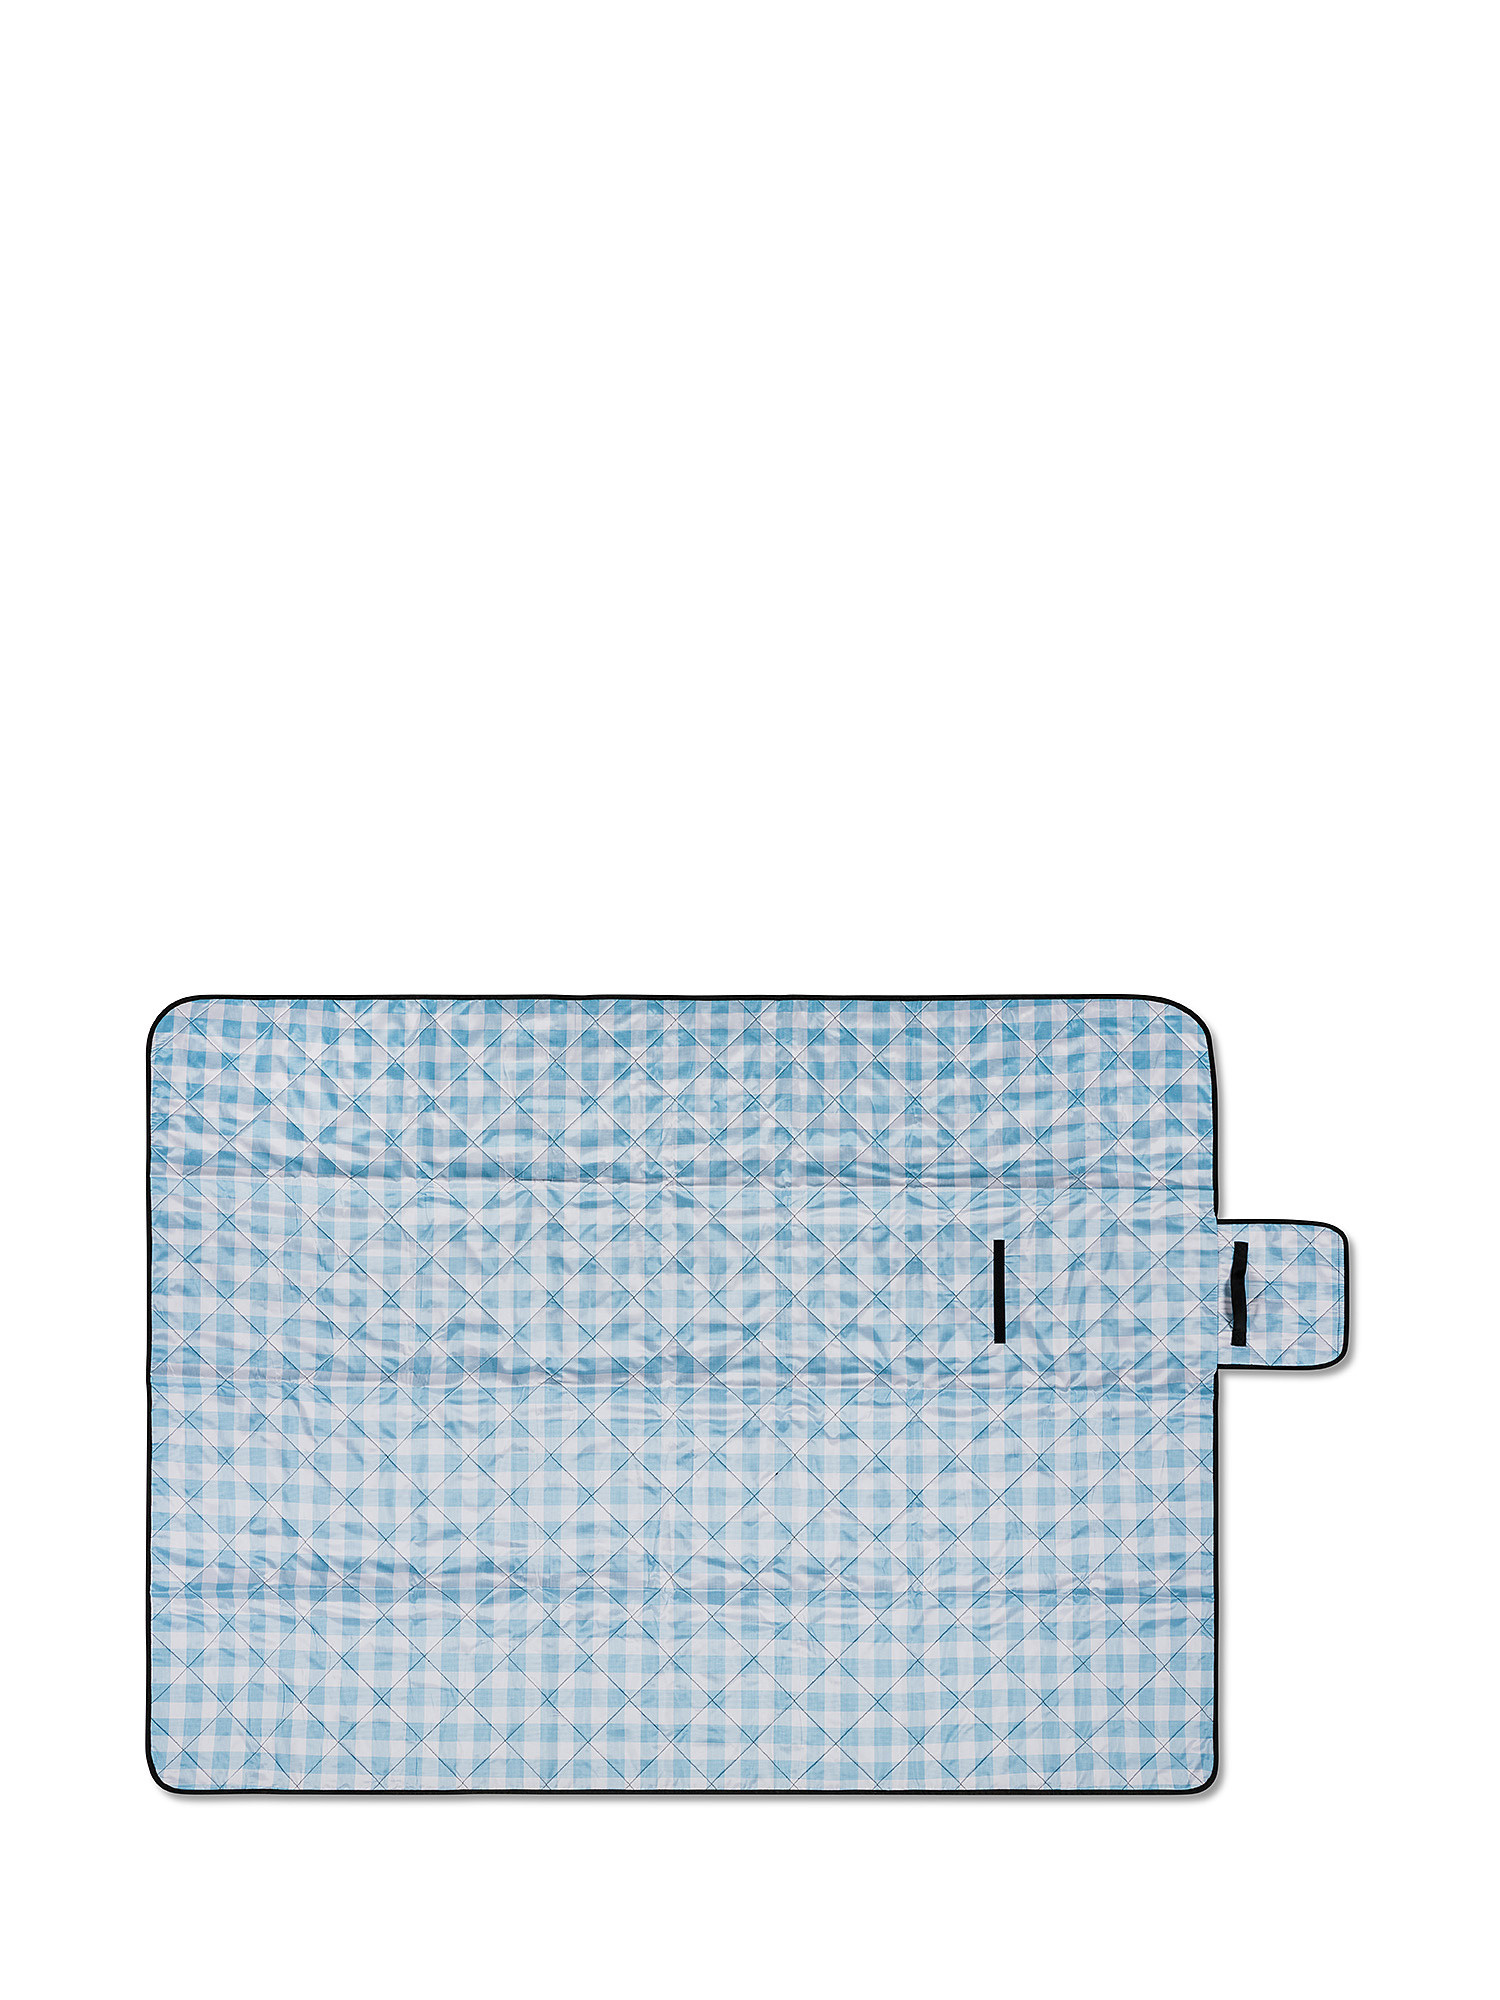 Coperta da picnic trapuntata, Azzurro, large image number 1